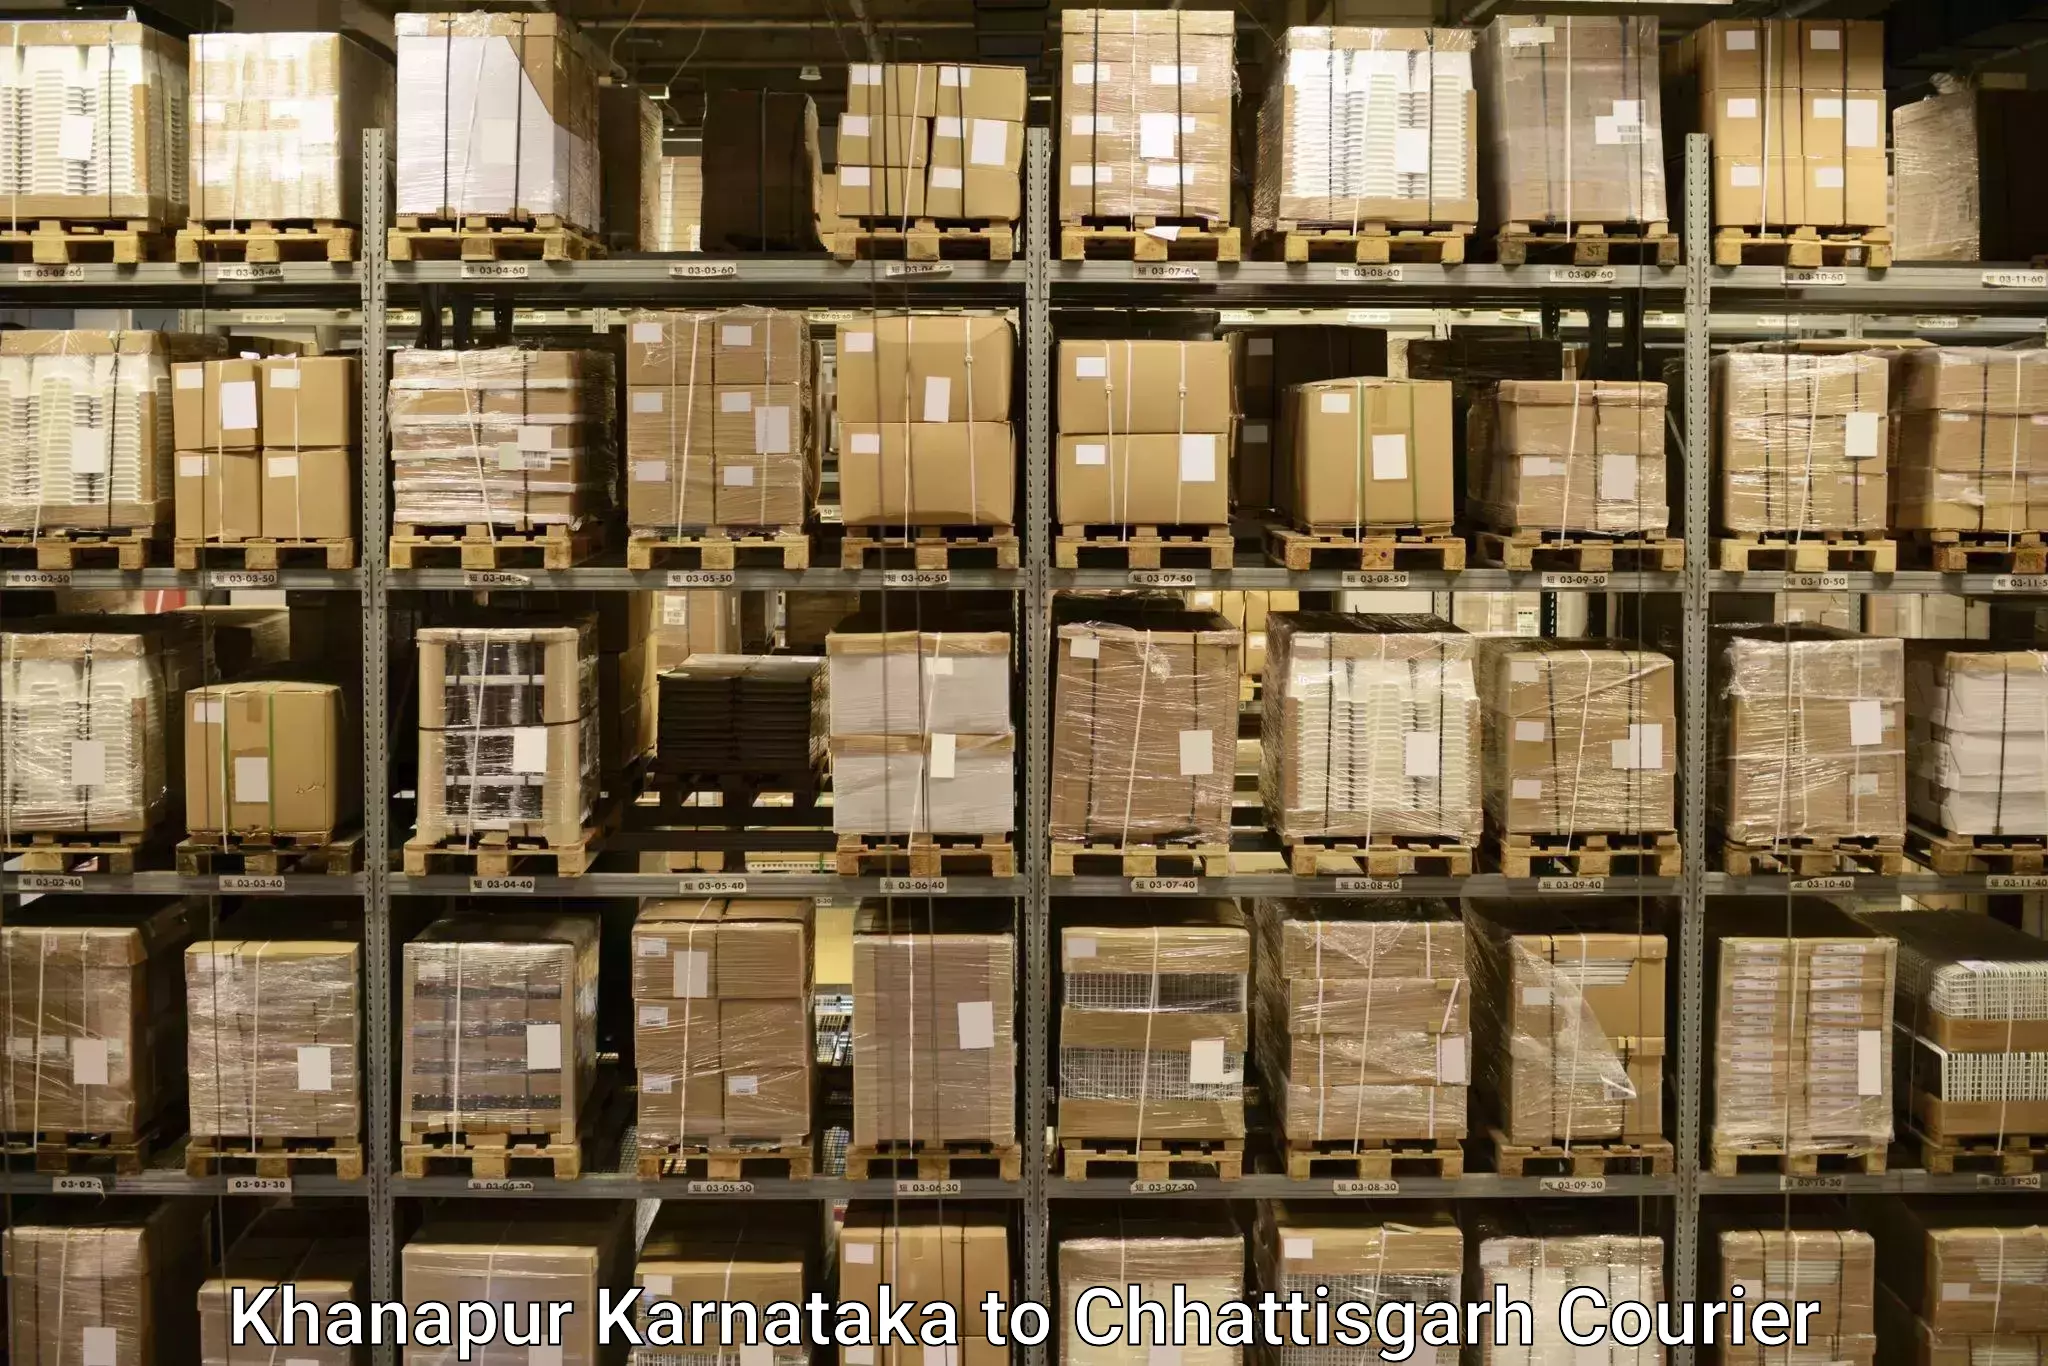 Luggage delivery system Khanapur Karnataka to Berla